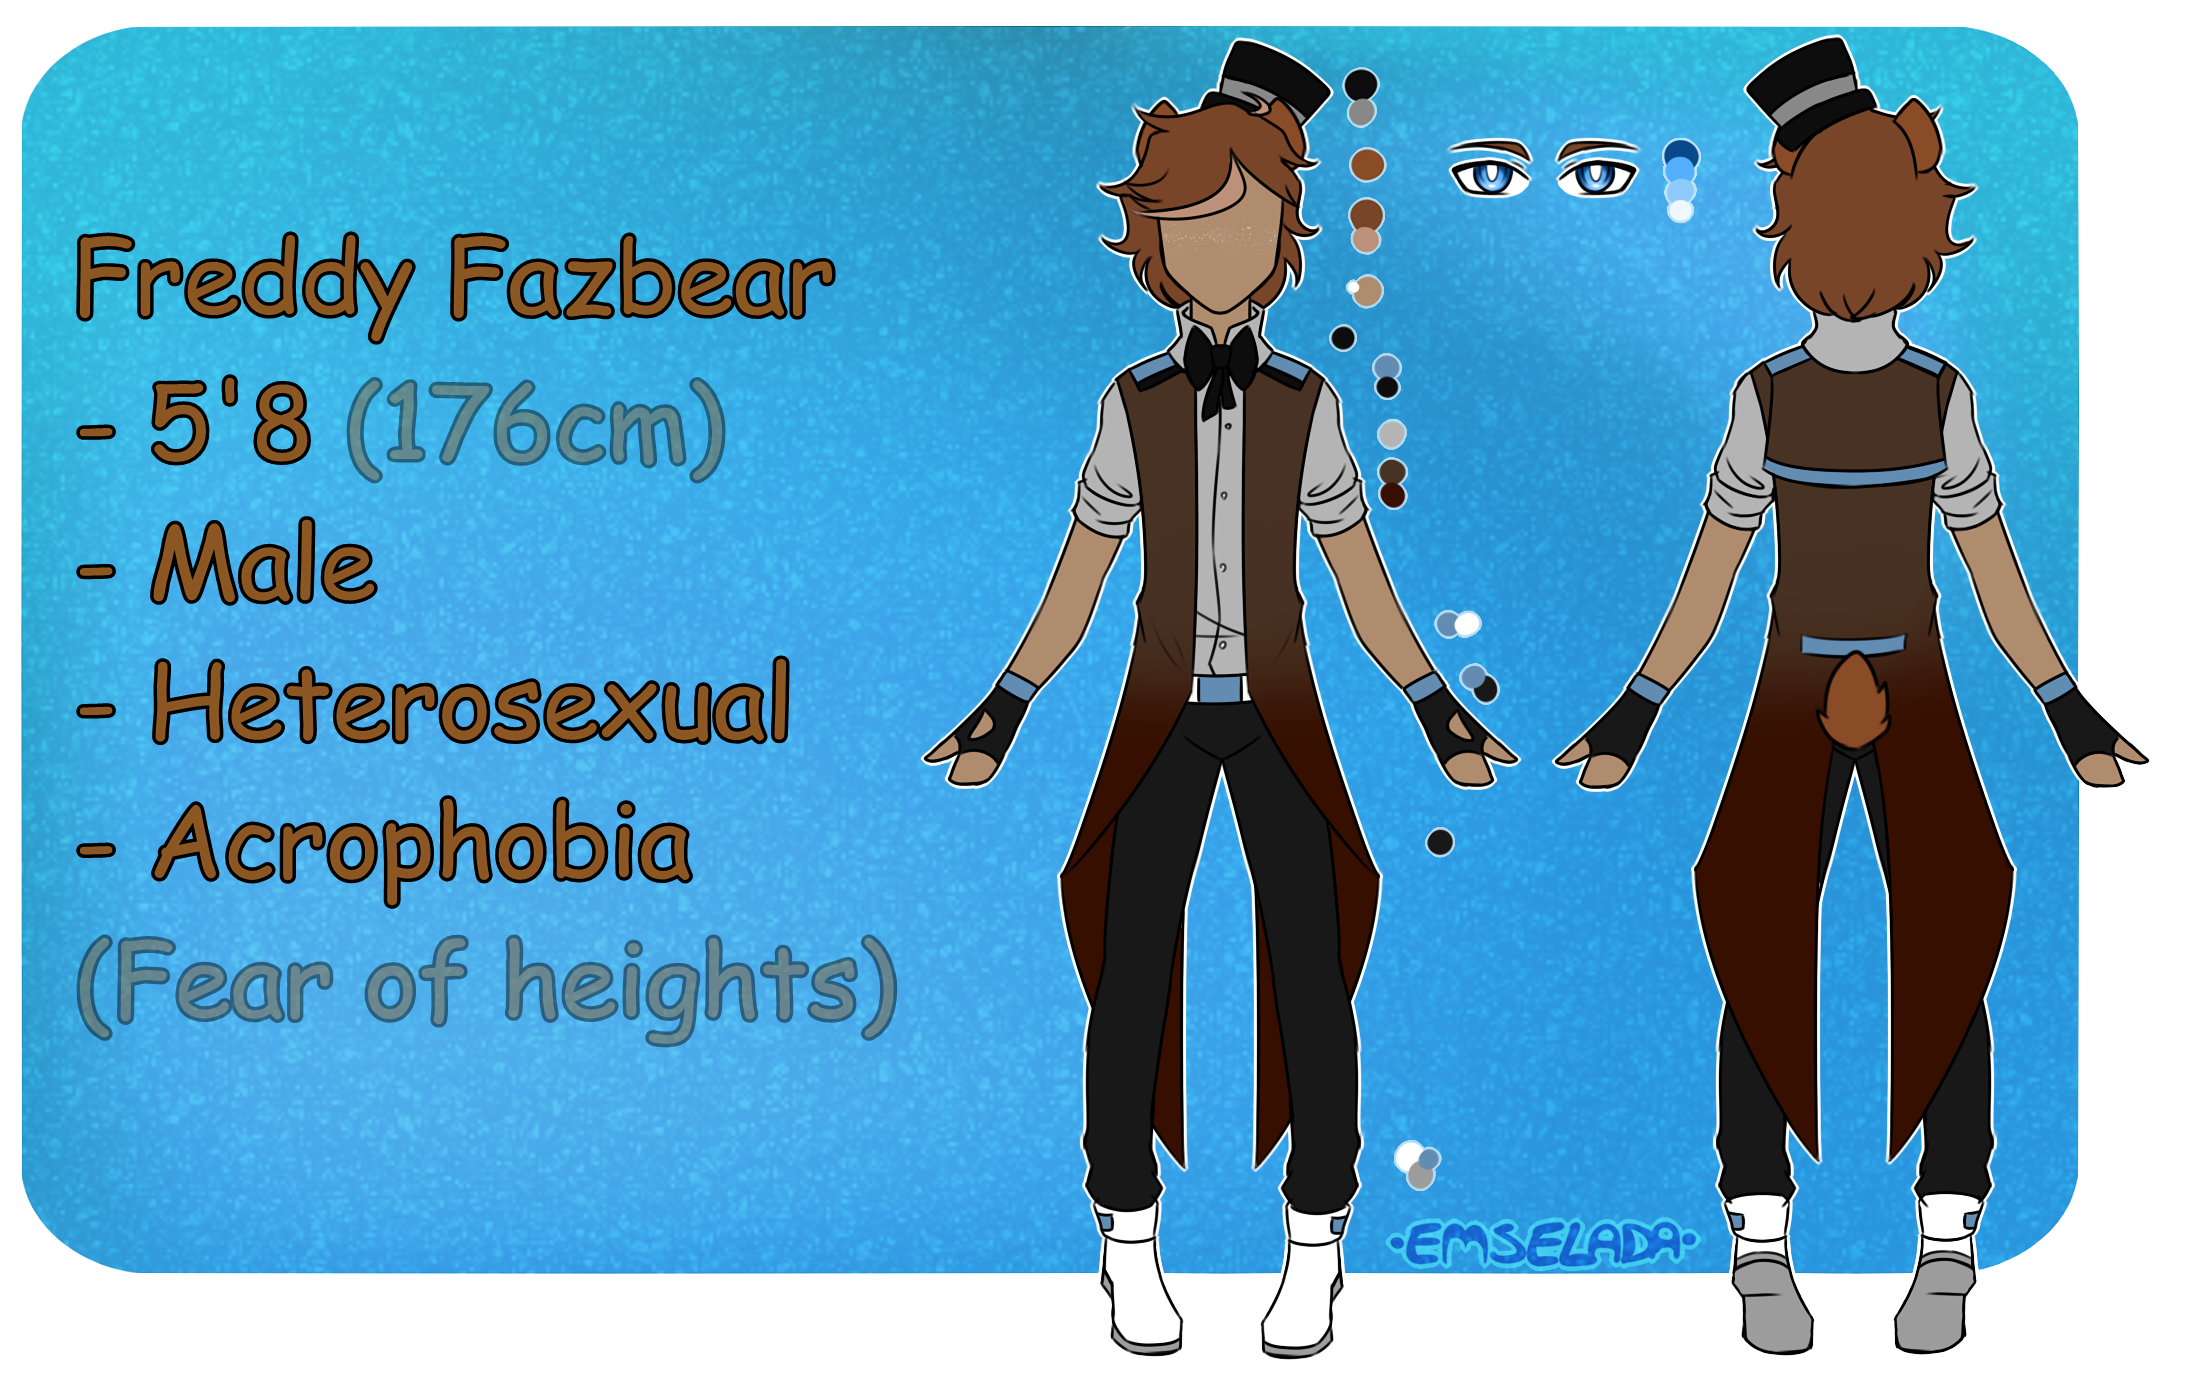 Freddy Fazbear by AlexFox11 - Fanart Central